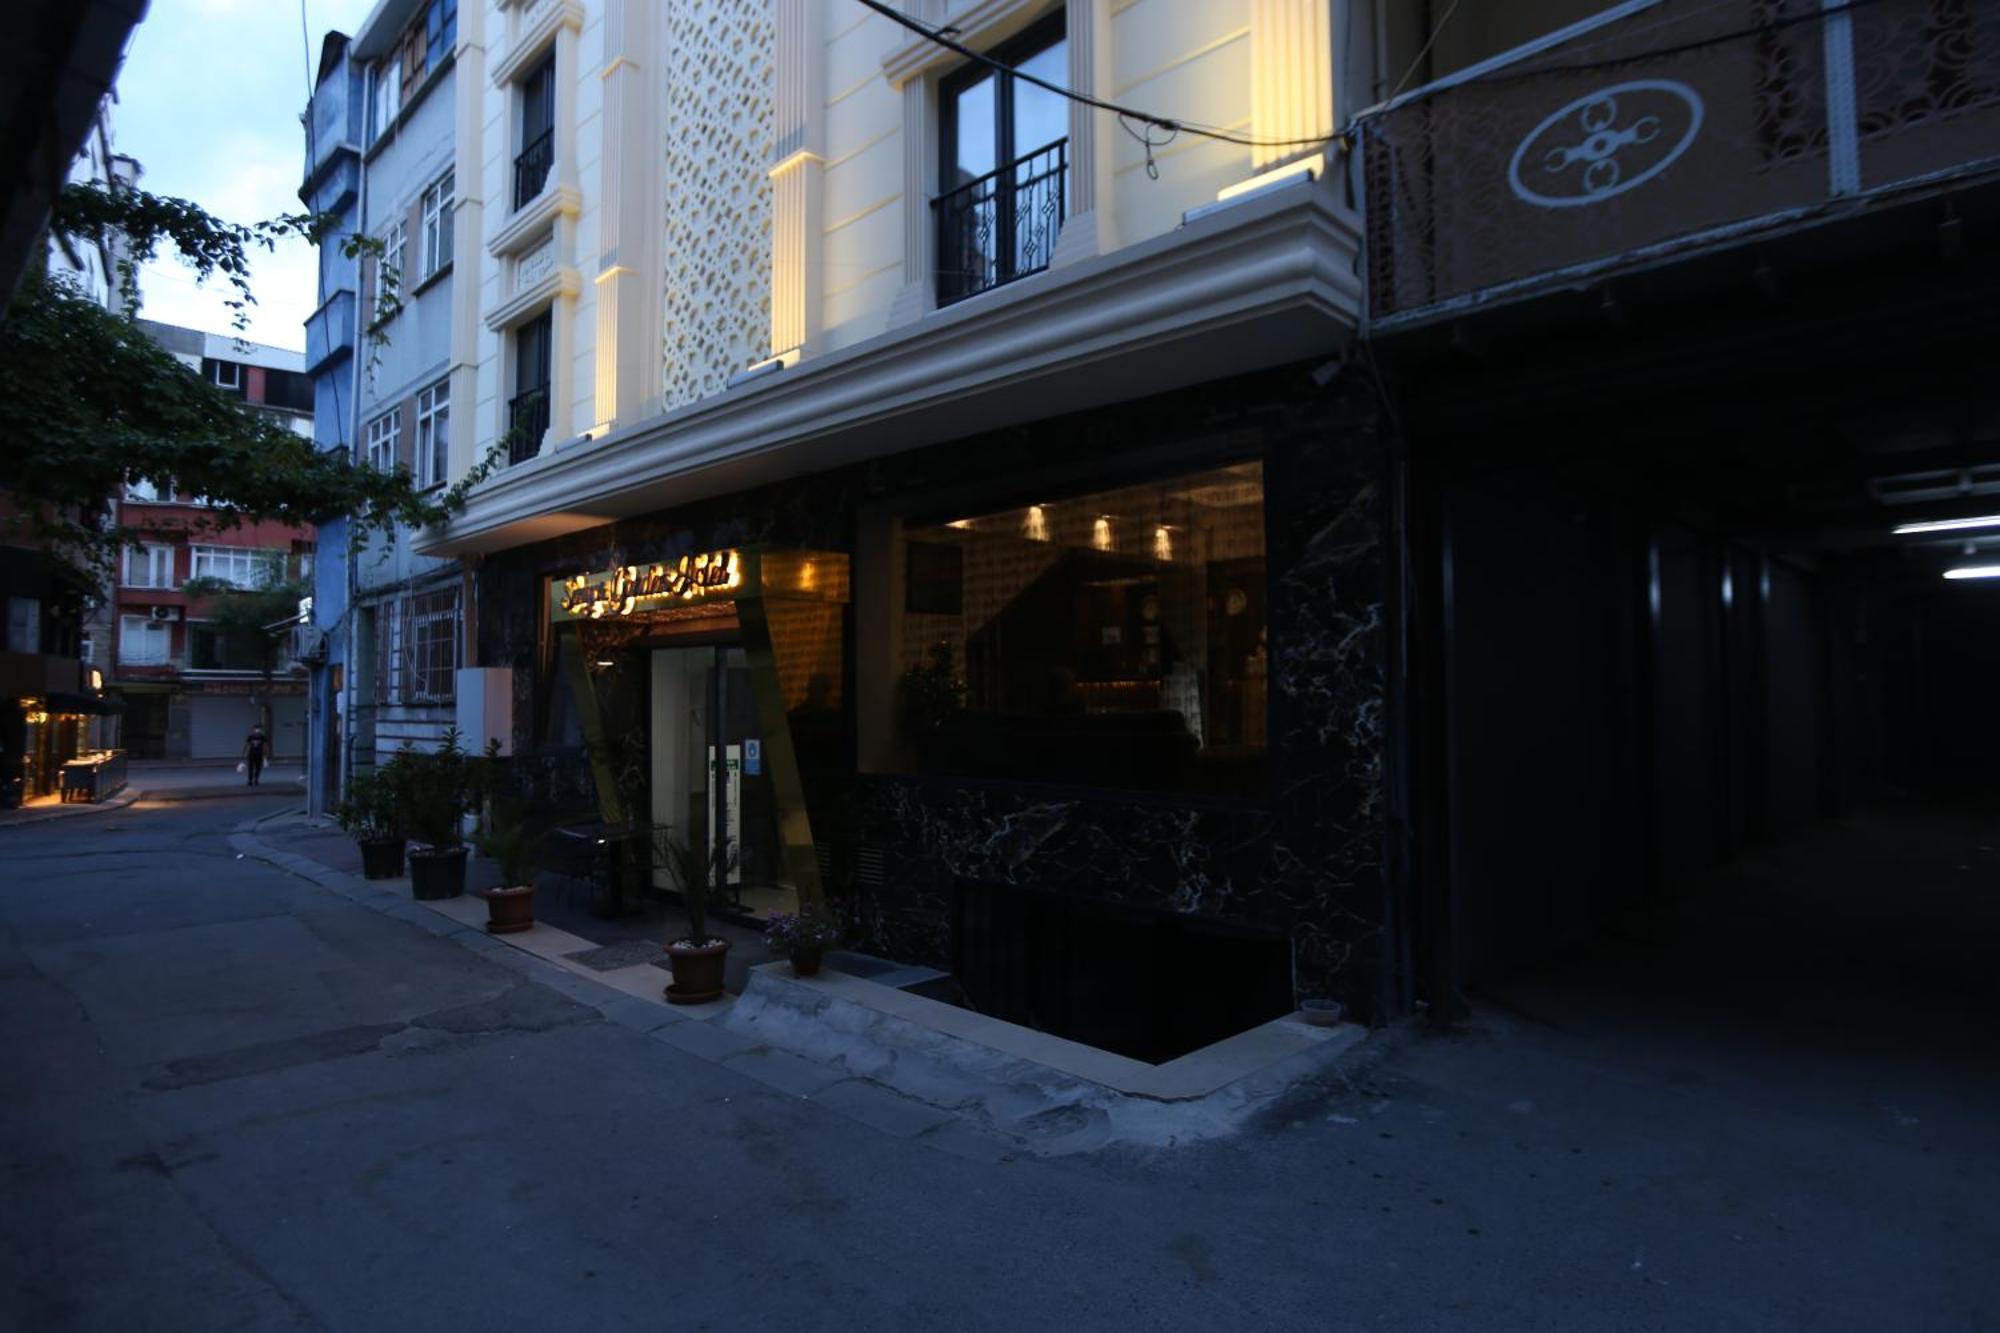 Senyor Garden Hotel اسطنبول المظهر الخارجي الصورة